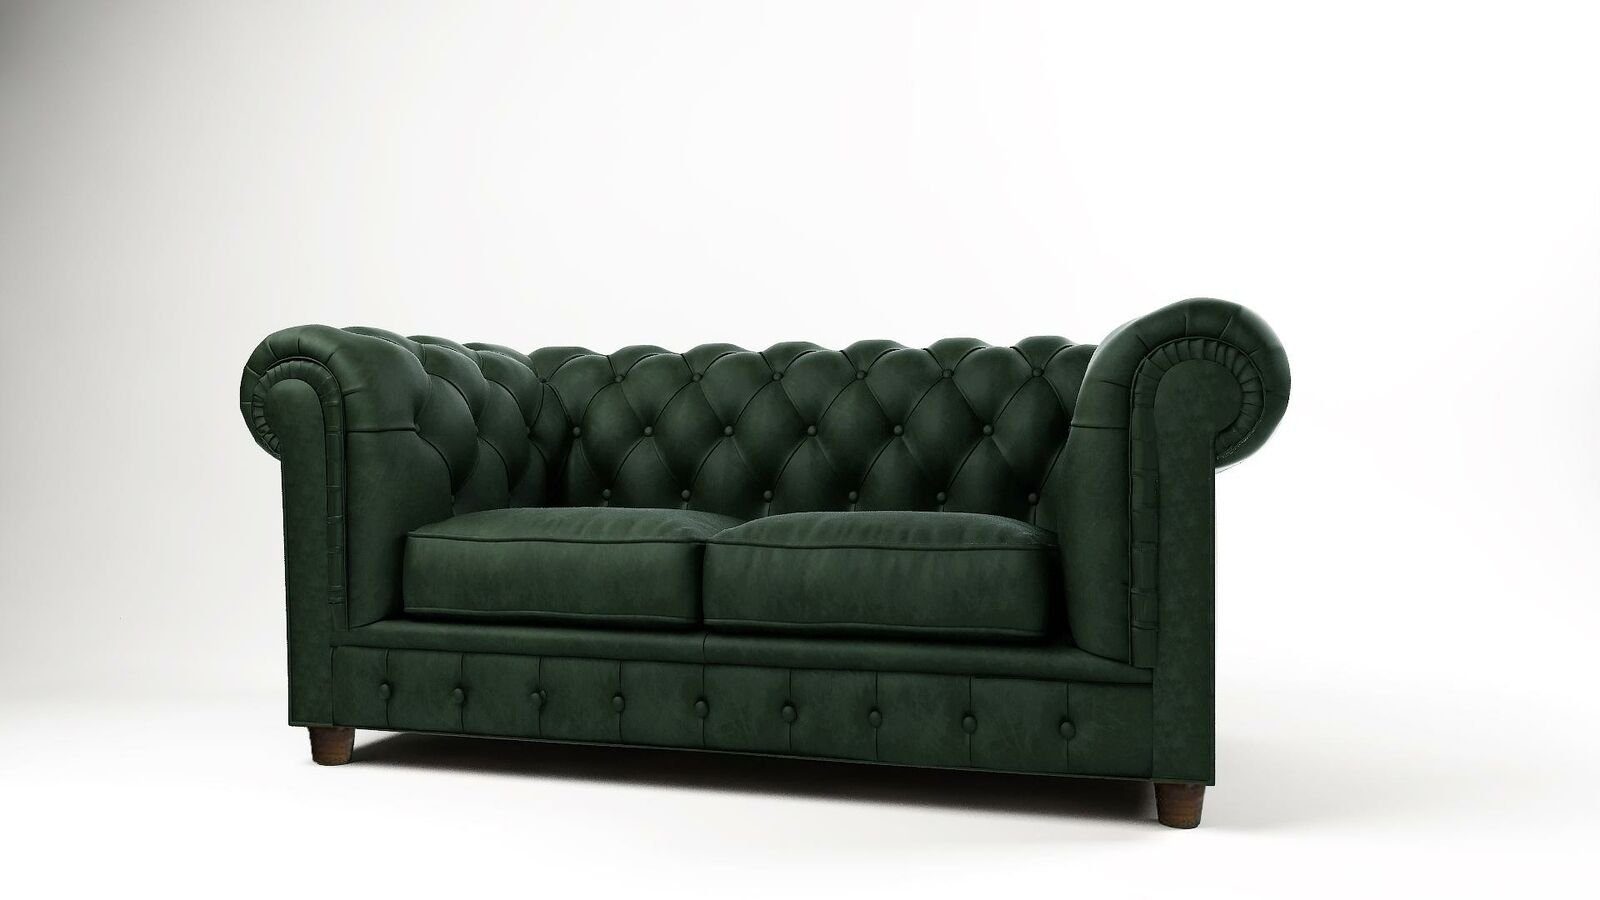 Neu, Europe in Couch Luxus Stoff Polster Made Möbel JVmoebel 2-Sitzer Sofa Chesterfield